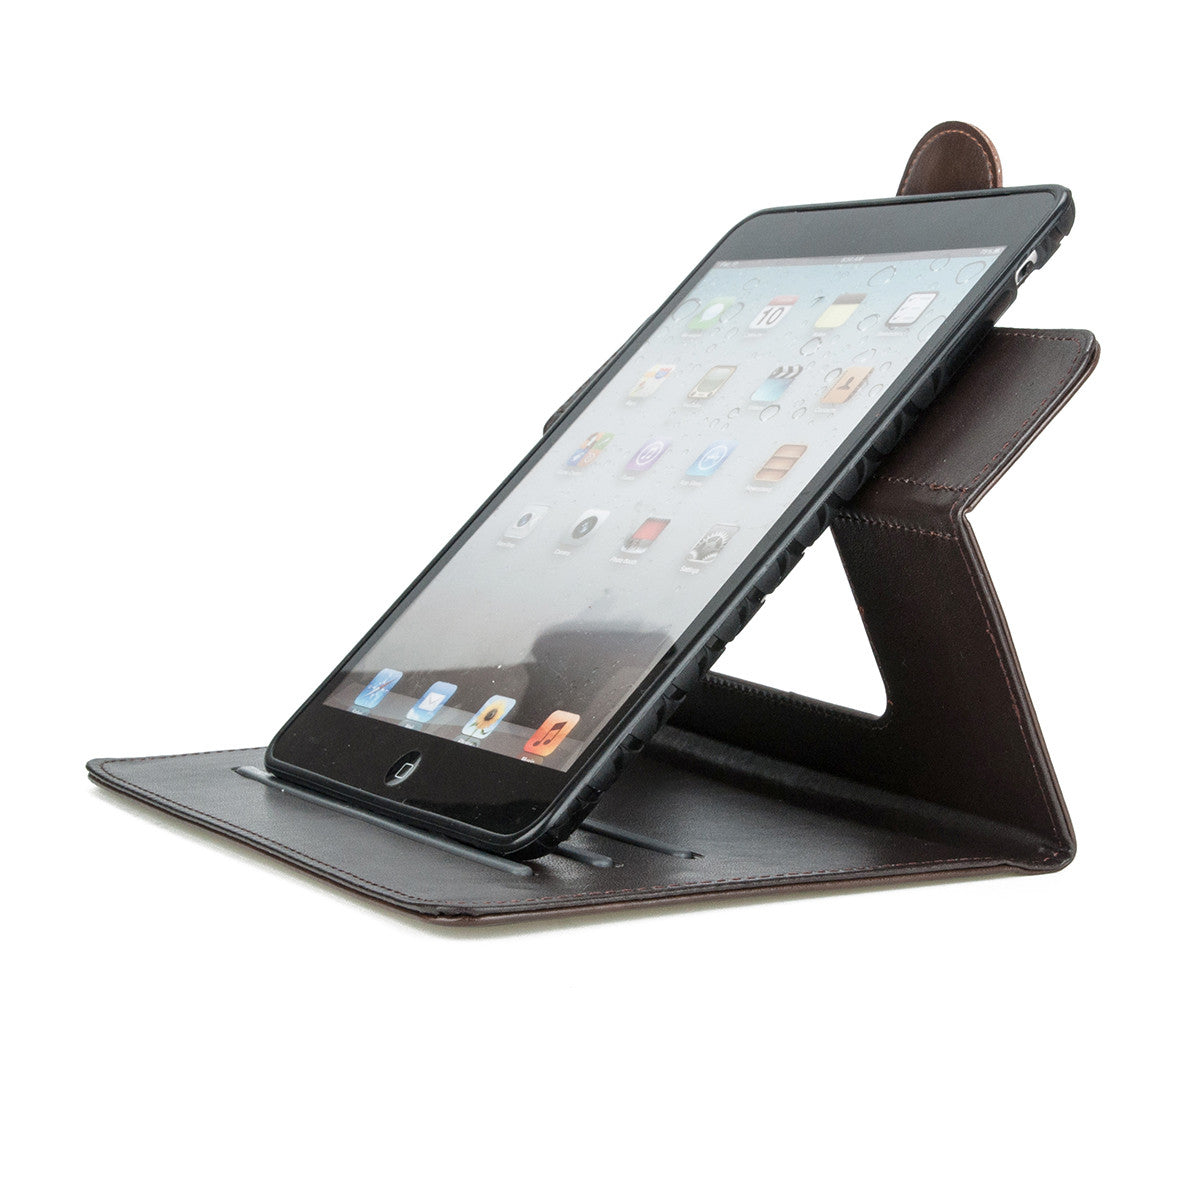 Bracevor Premium Smart Leather Case for Apple iPad mini 1 2 3 - Brown